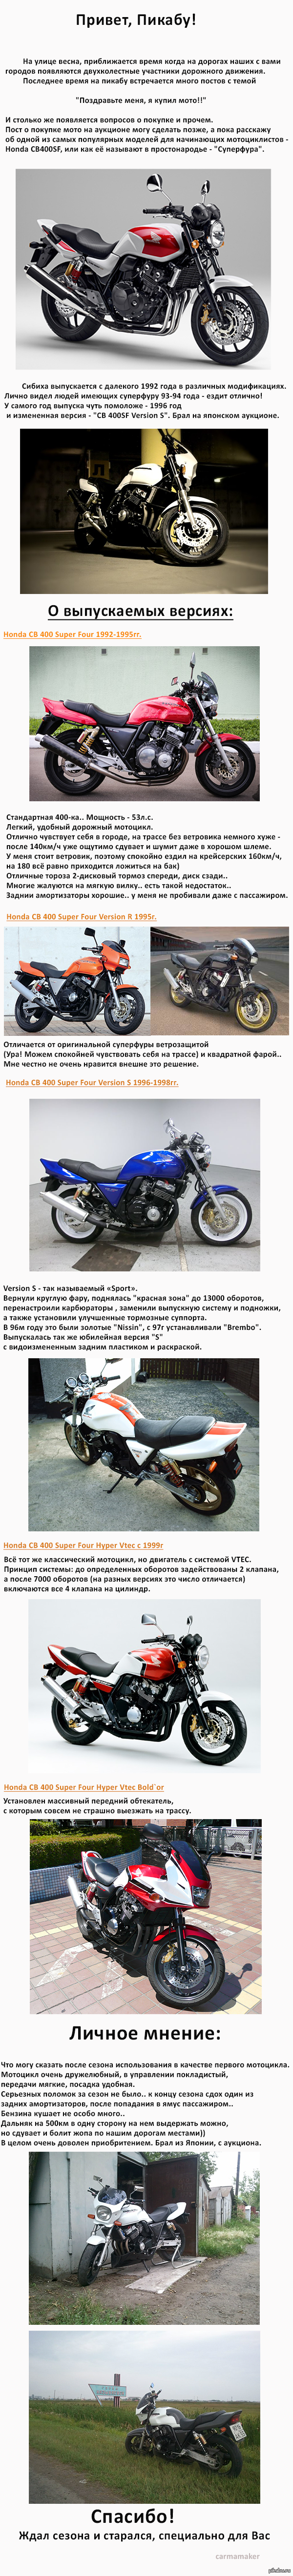 Honda CB400SF.         )